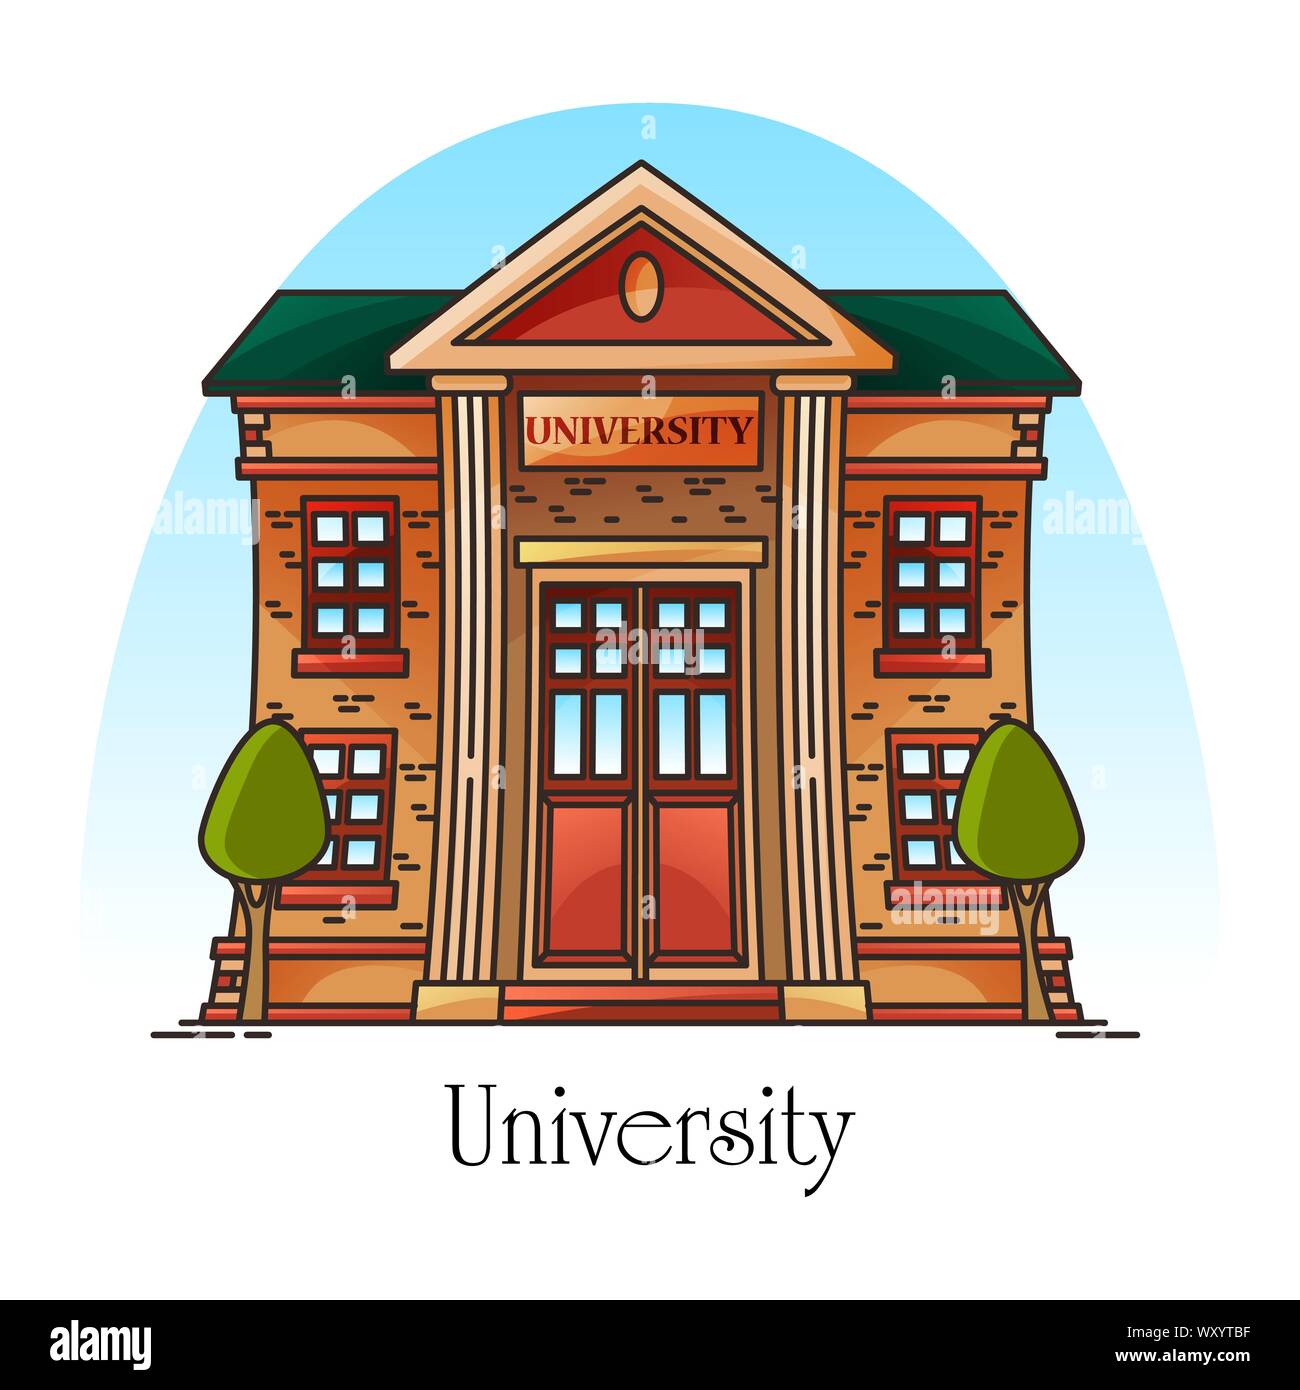 University Building Illustration